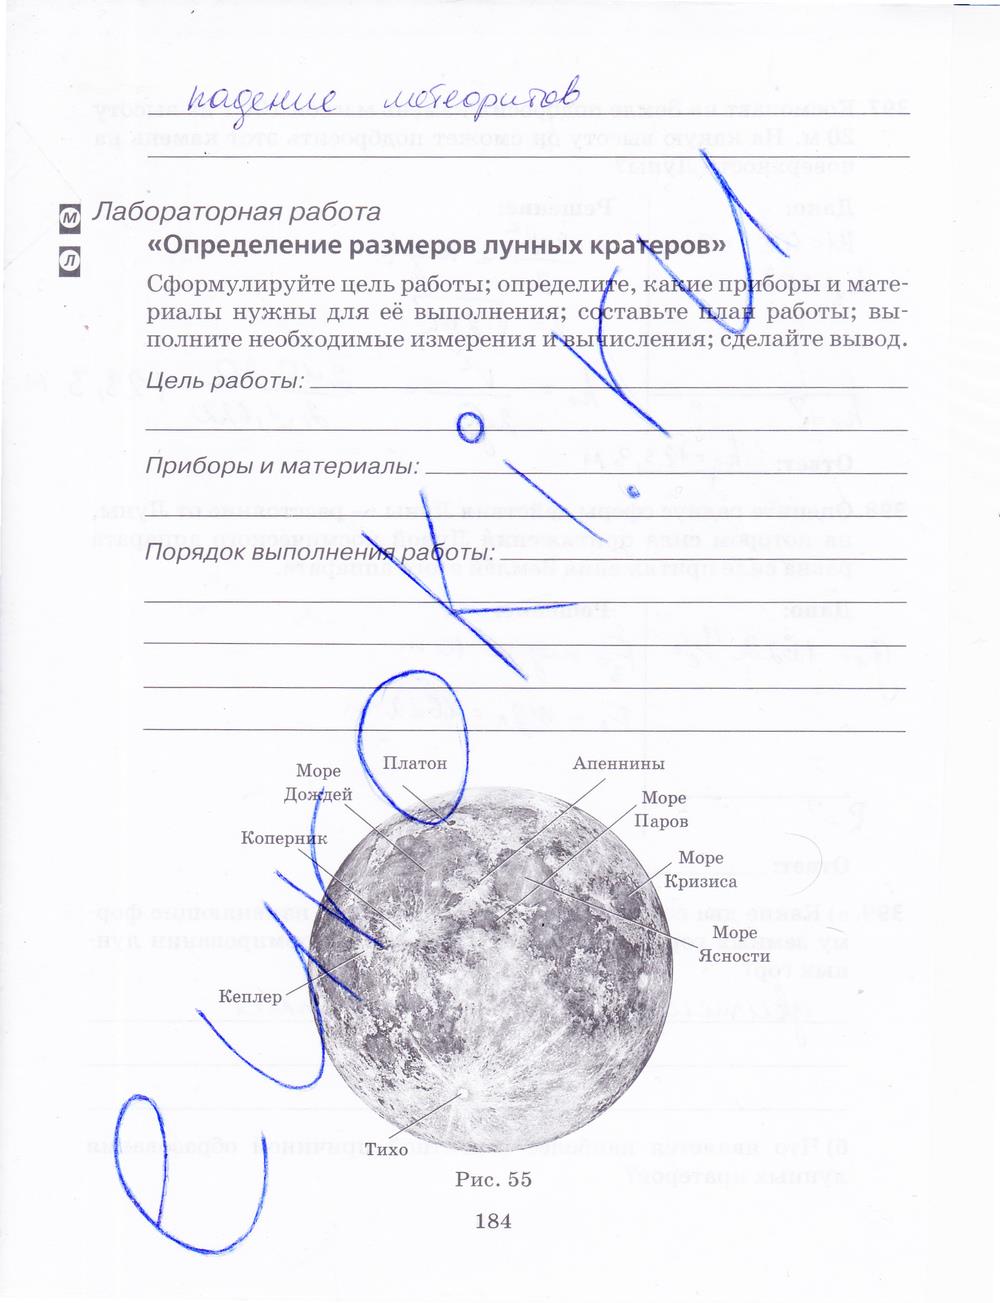 гдз 9 класс рабочая тетрадь страница 184 физика Пурышева, Важеевская, Чаругин